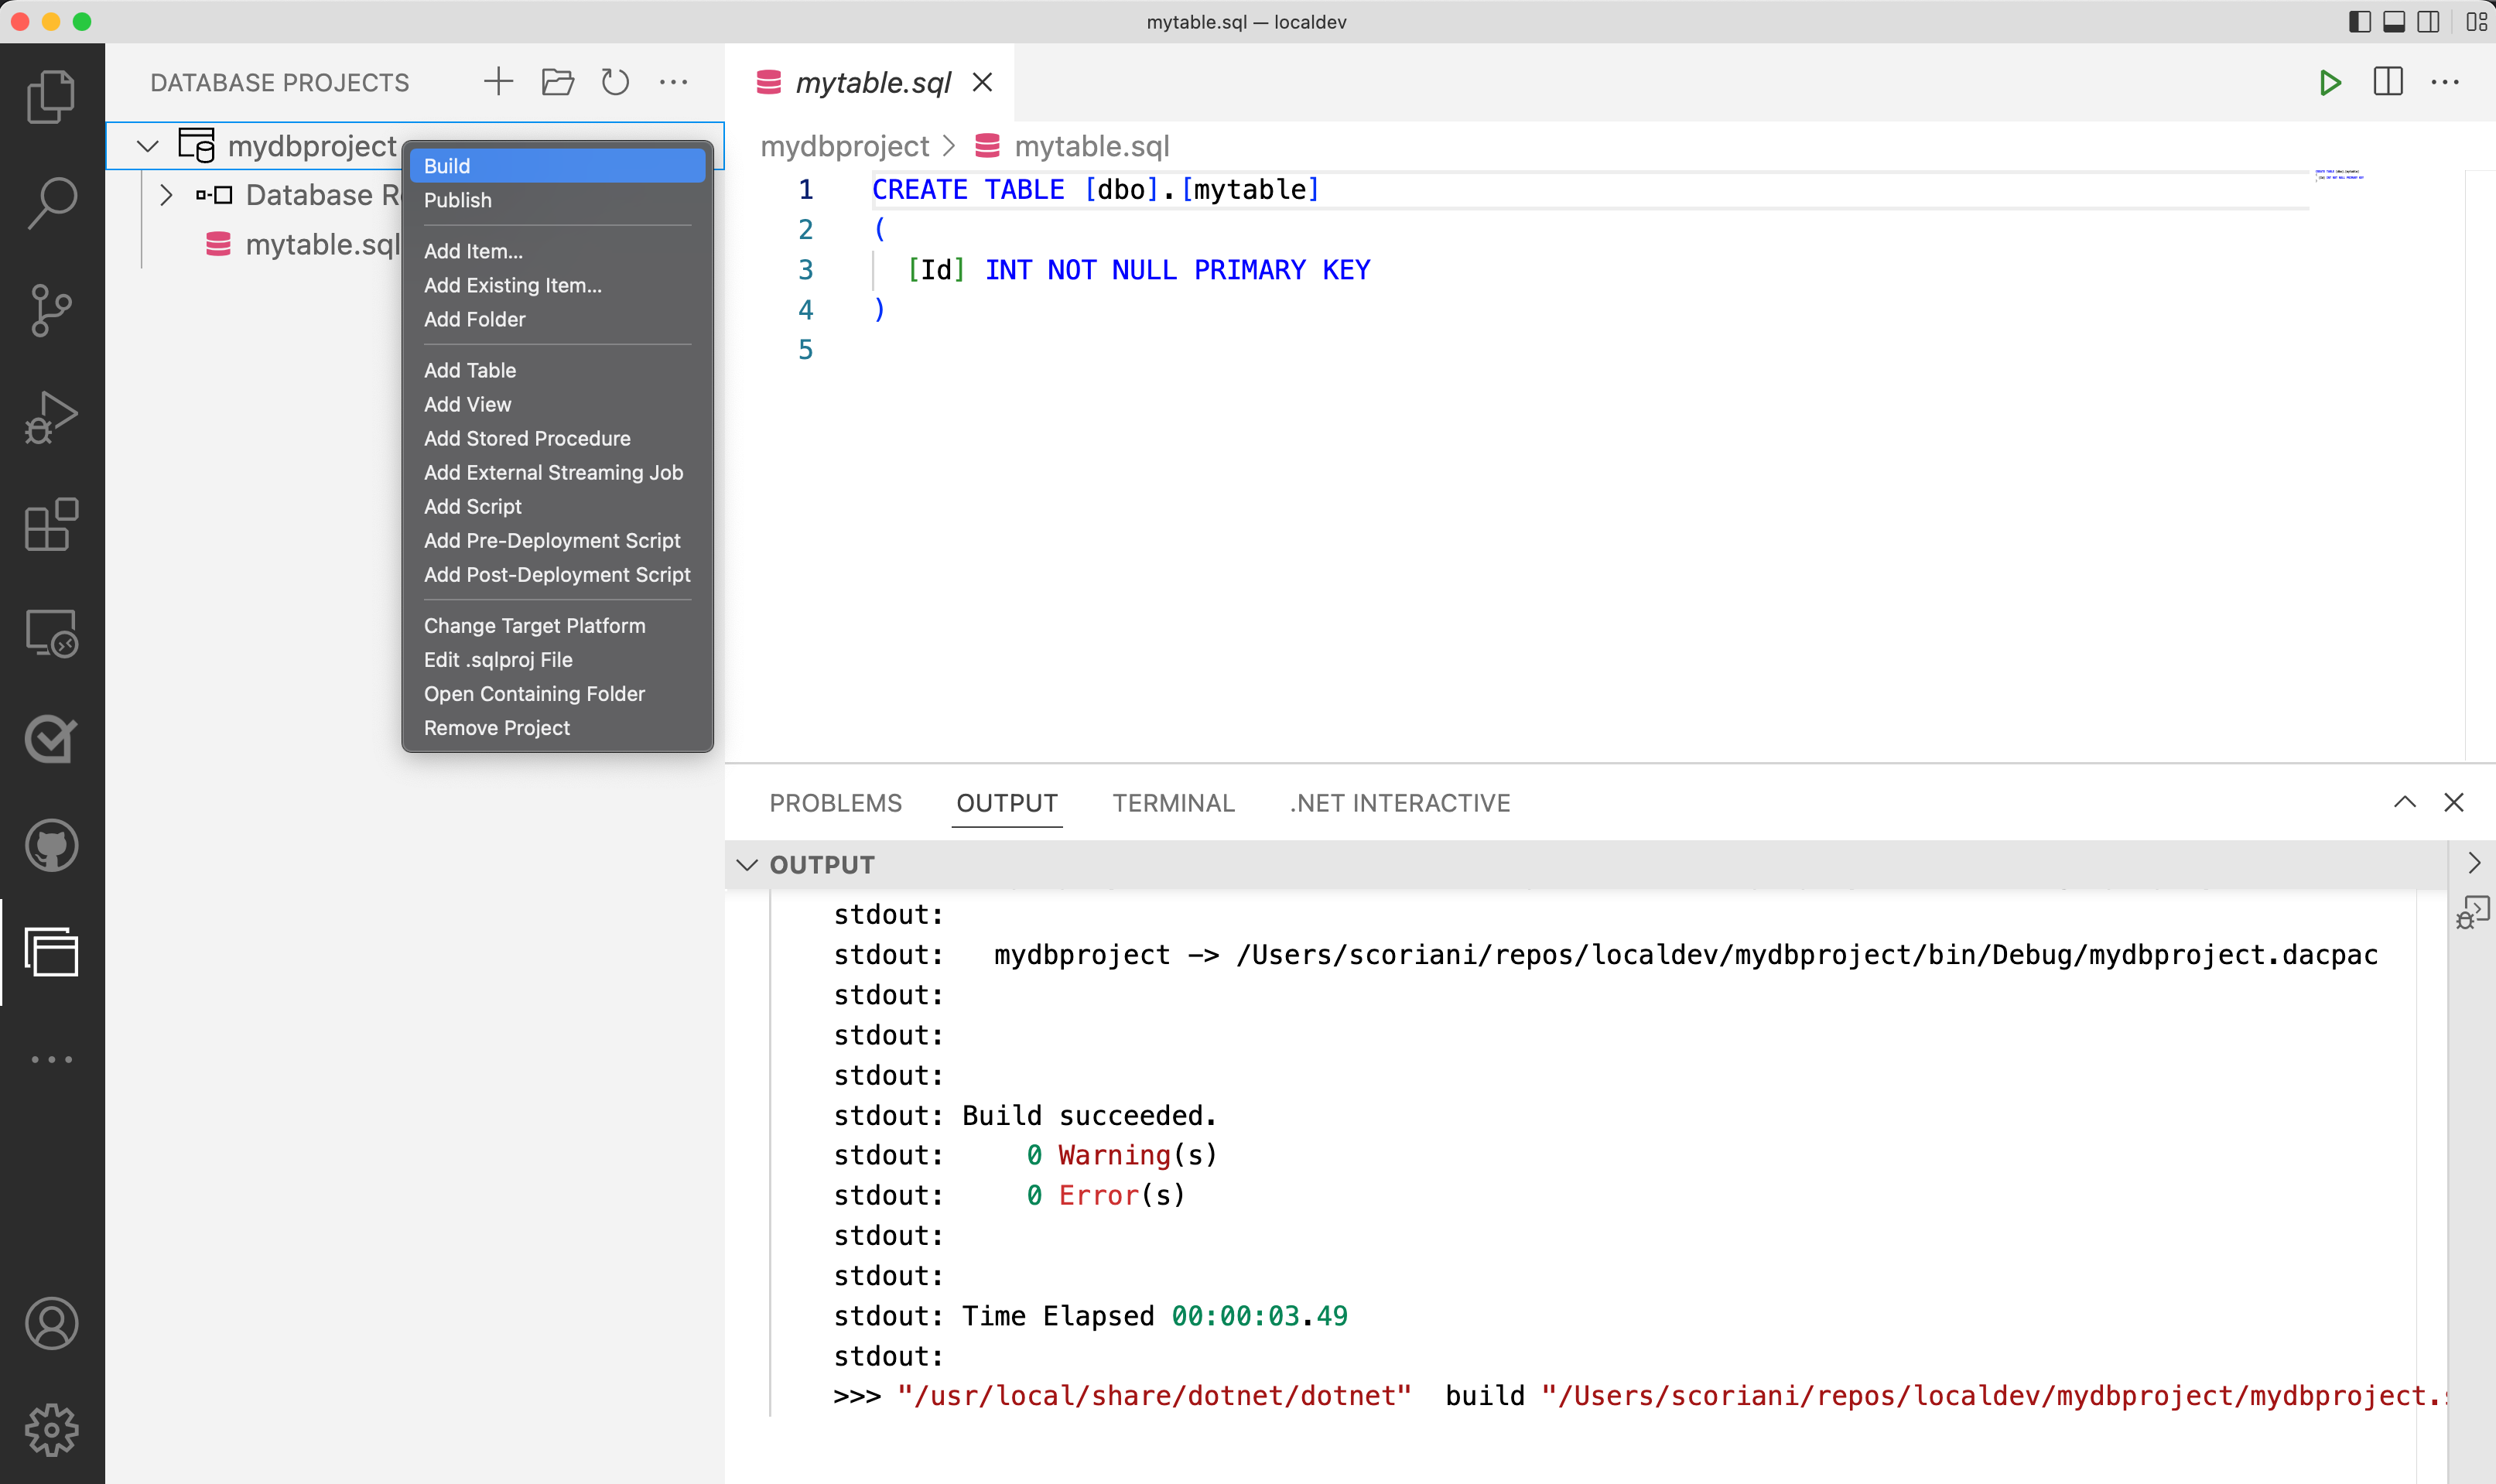 Screenshot of selecting build from the Database Project menu in Visual Studio Code.